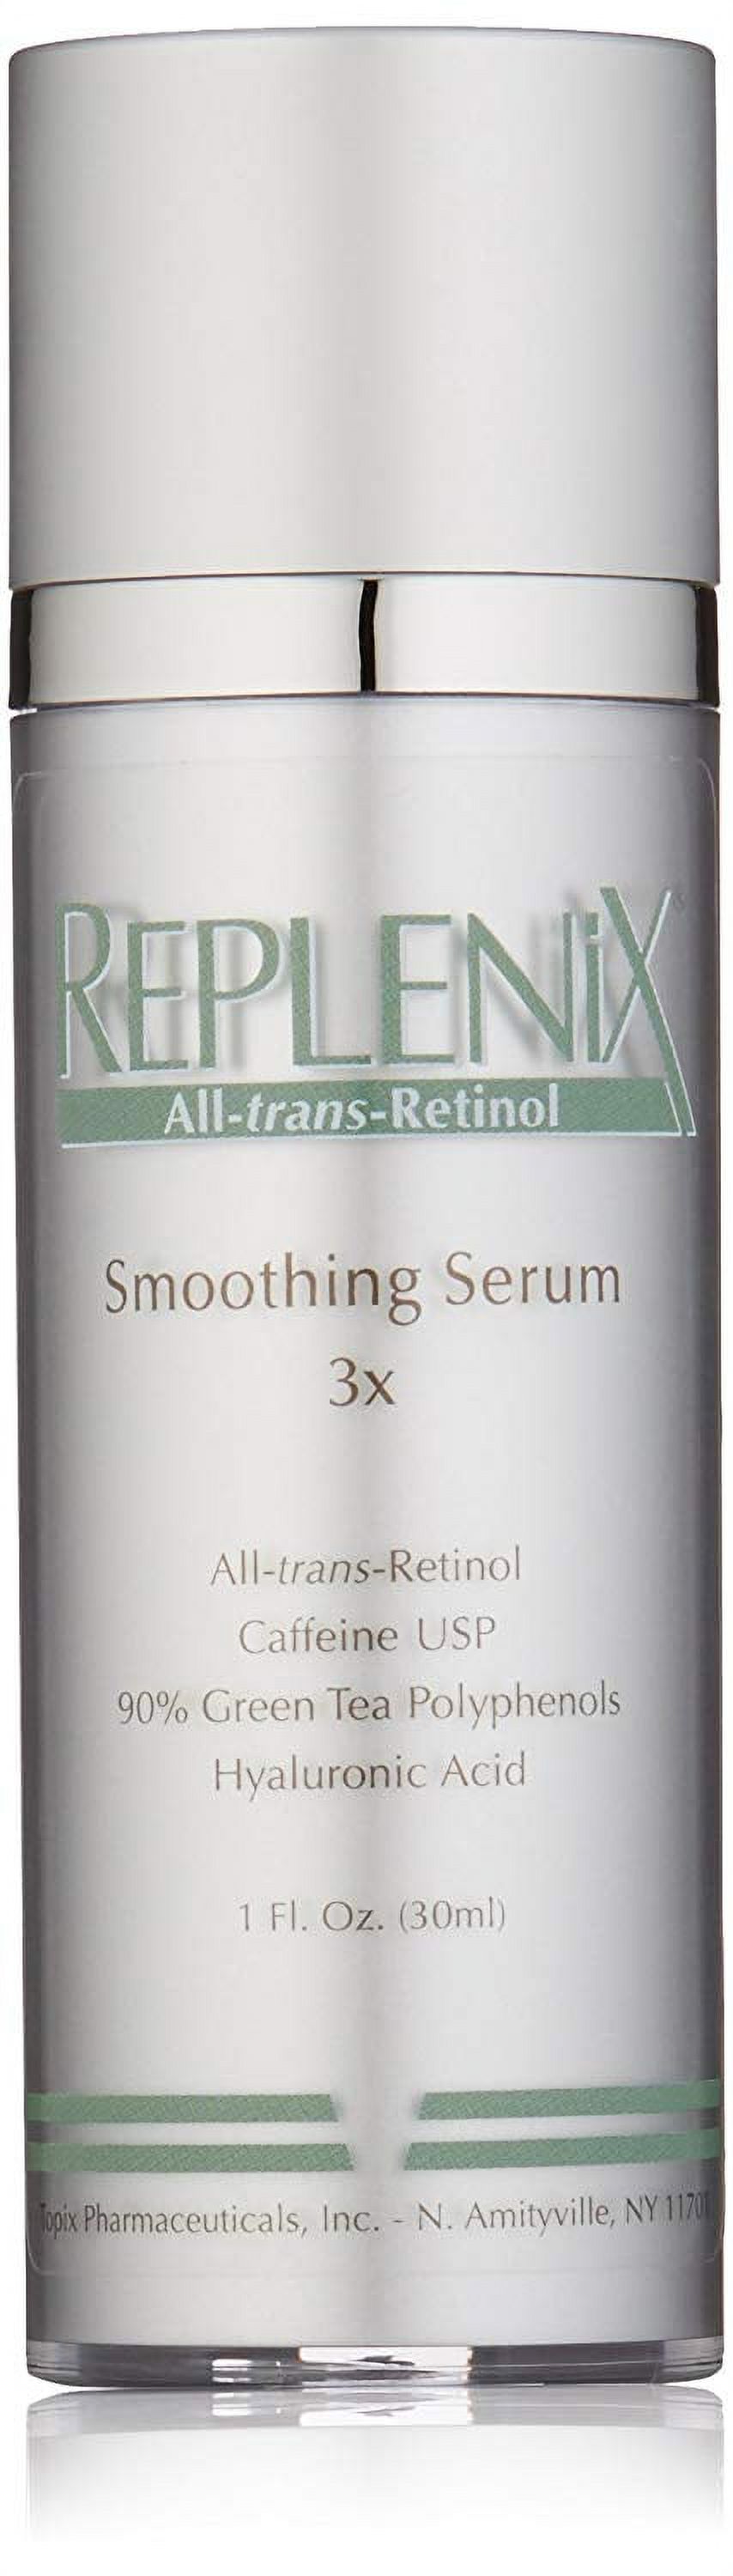 Replenix Retinolforte treatment Serum 3x. 1 fl oz - image 1 of 3